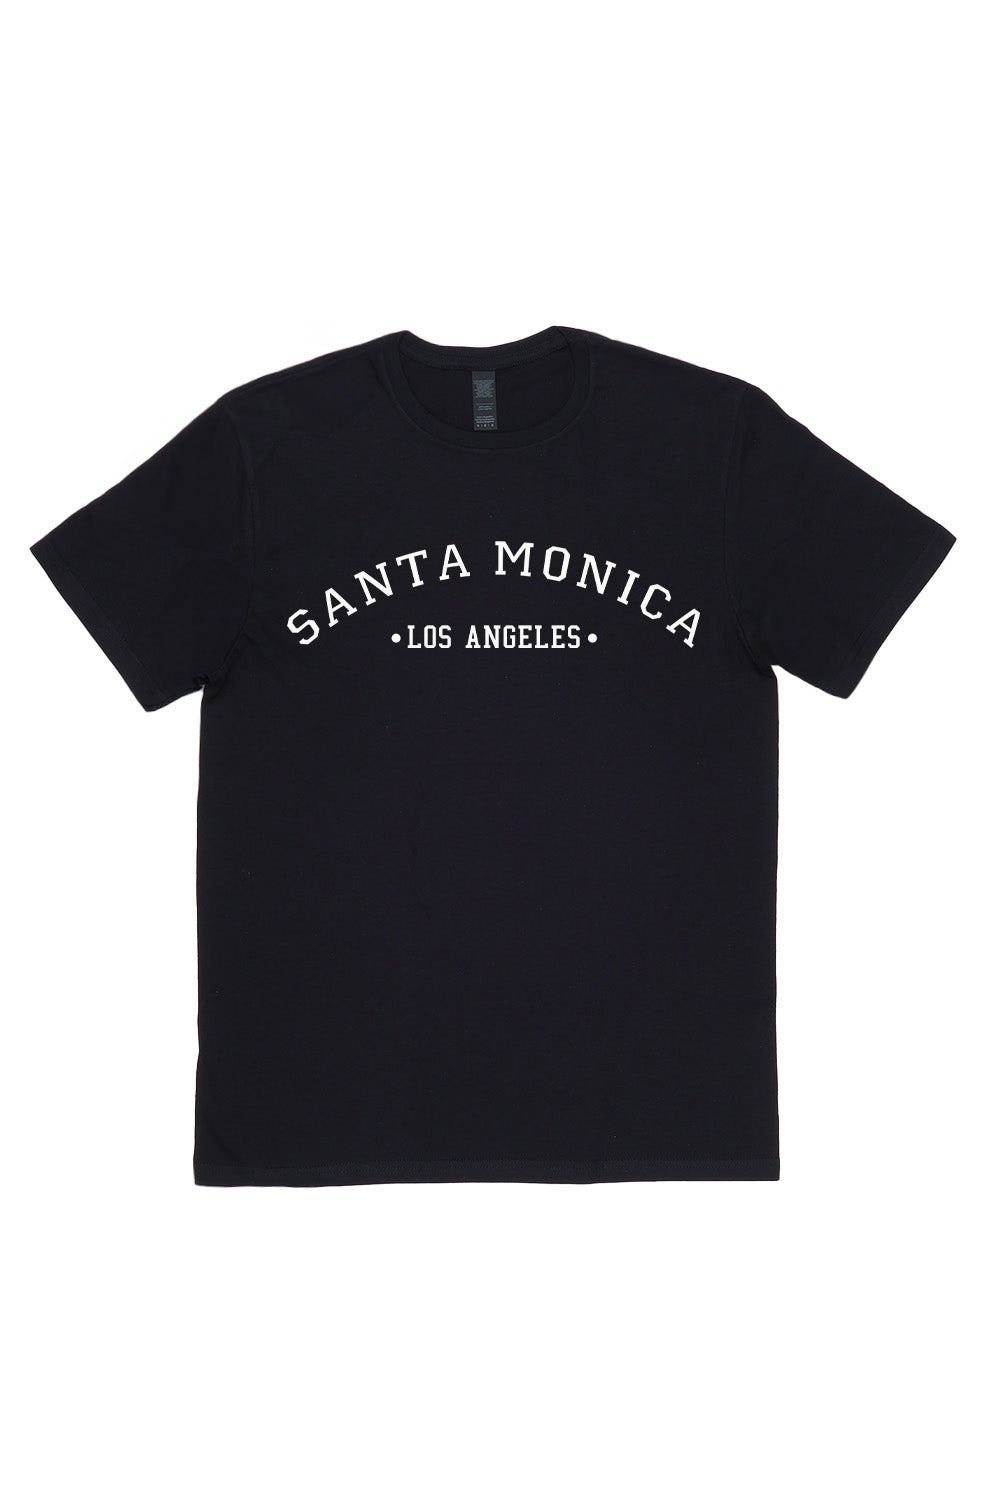 Santa Monica T-Shirt in Black (Custom Packs)